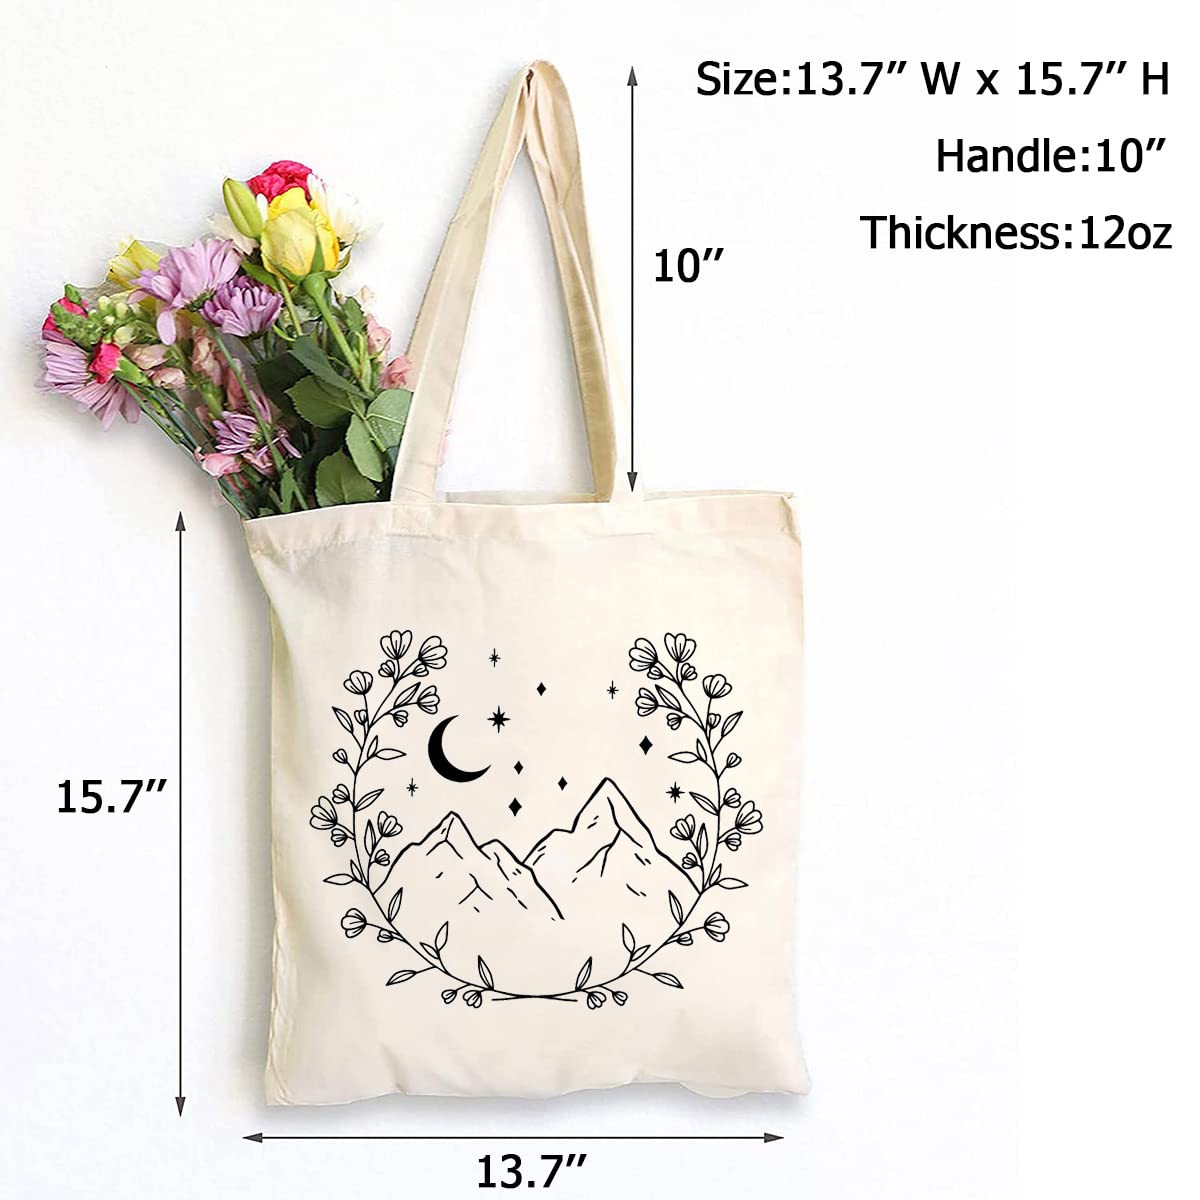 SAUIVD Mountain Moon Flowers Cotton Canvas Tote Bag Mountains Wreath Handbag for Party Grocery Shopping Market